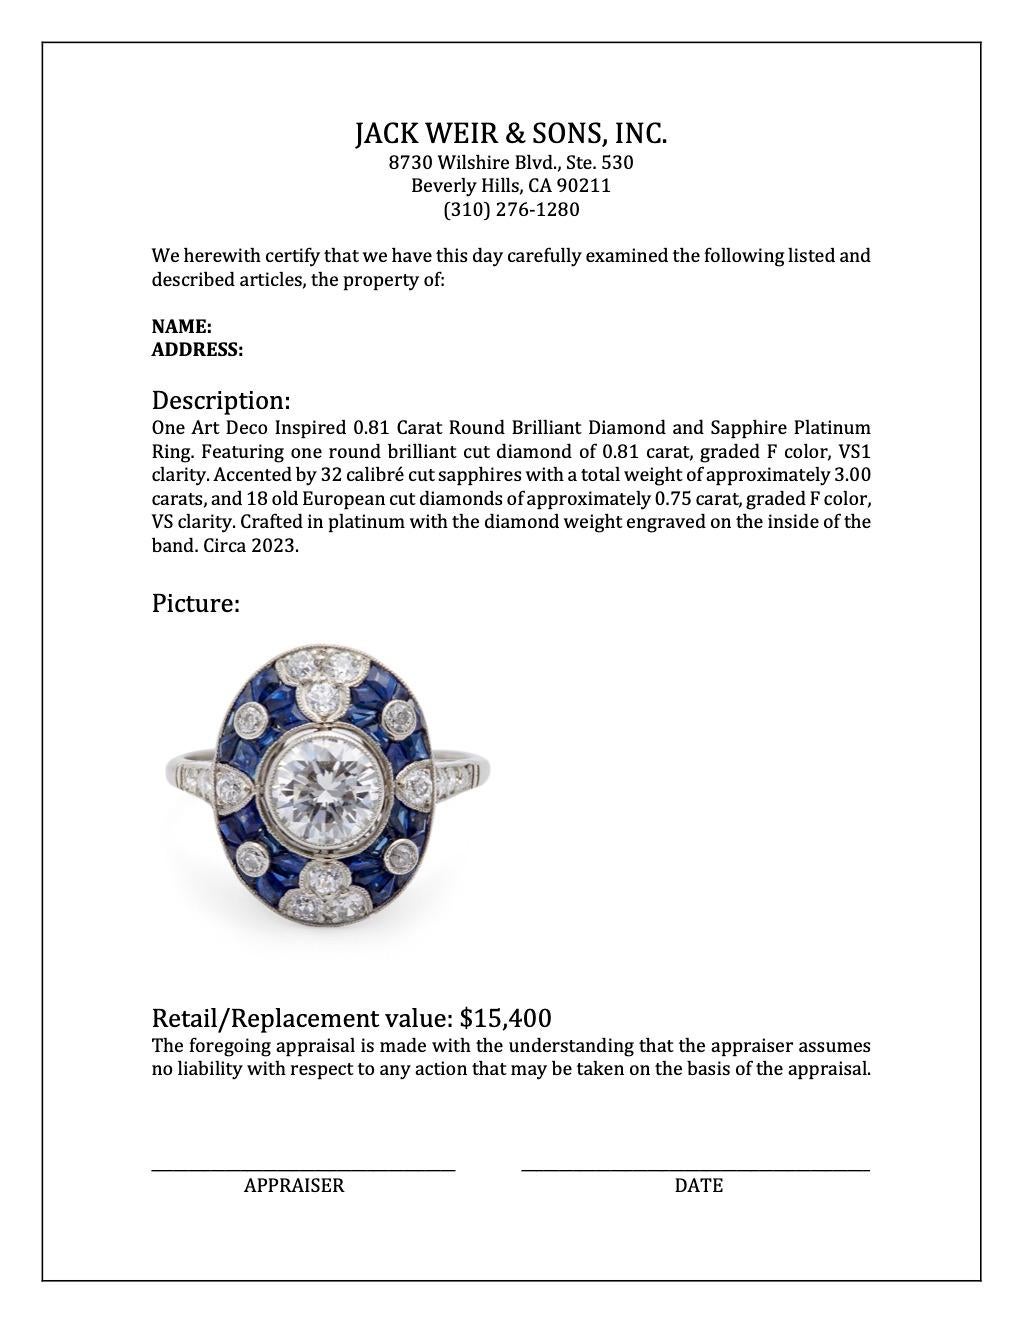 Art Deco Inspired 0.81 Carat Round Brilliant Diamond and Sapphire Platinum Ring For Sale 2